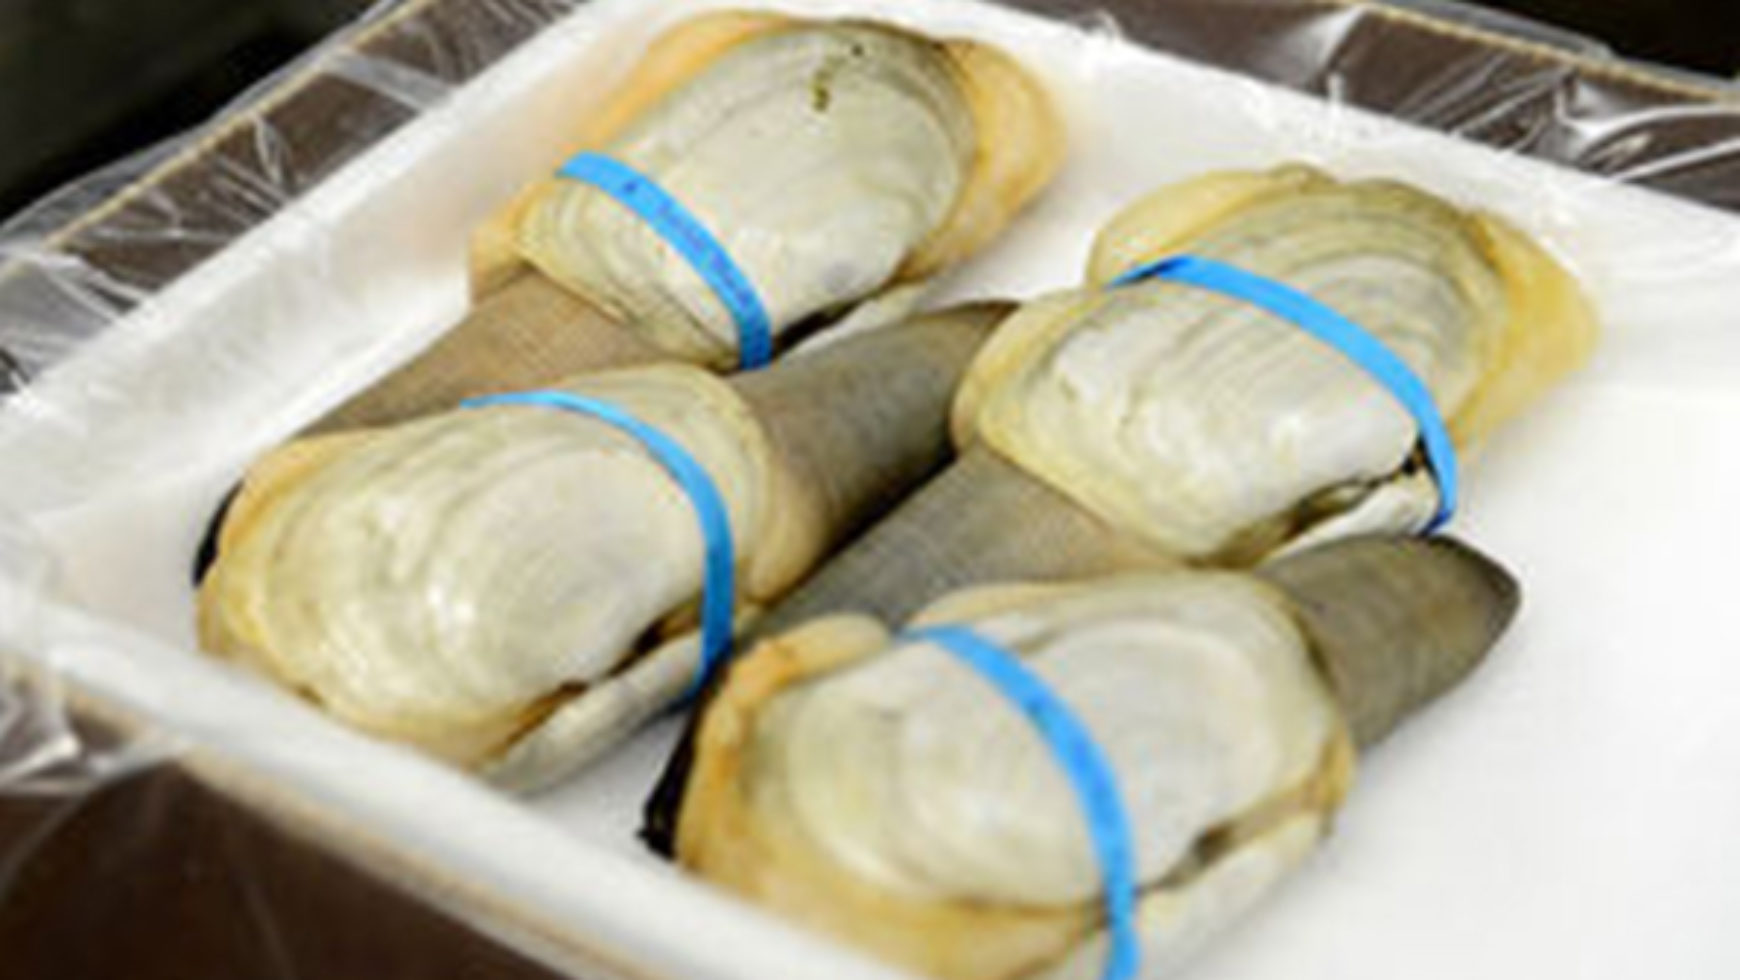 China lifts ban of US West Coast shellfish